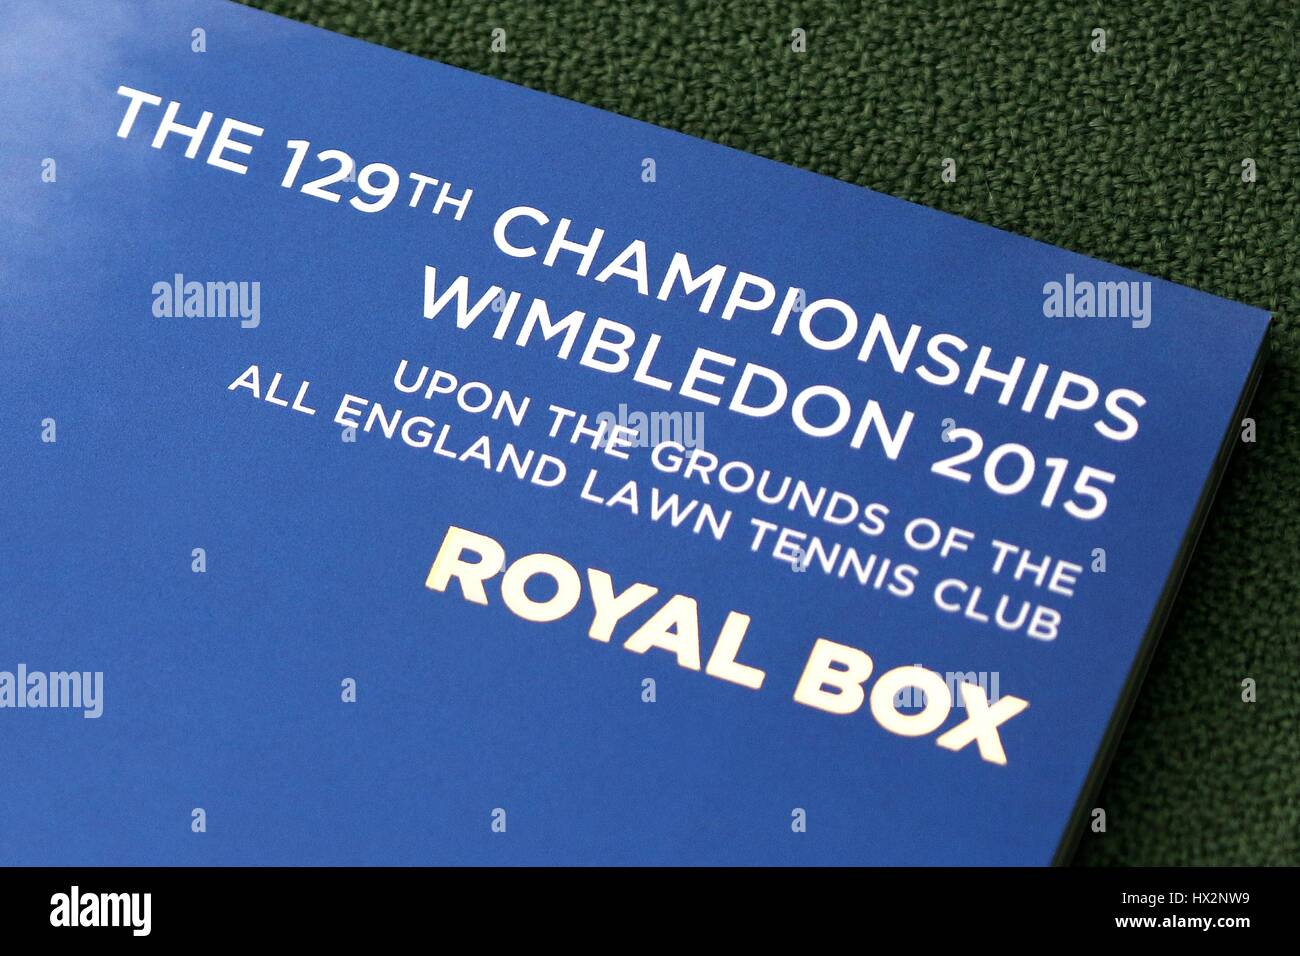 ROYAL BOX PROGRAMME THE WIMBLEDON CHAMPIONSHIPS THE WIMBLEDON CHAMPIONSHIPS 15 THE ALL ENGLAND TENNIS CLUB WIMBLEDON LONDON E Stock Photo